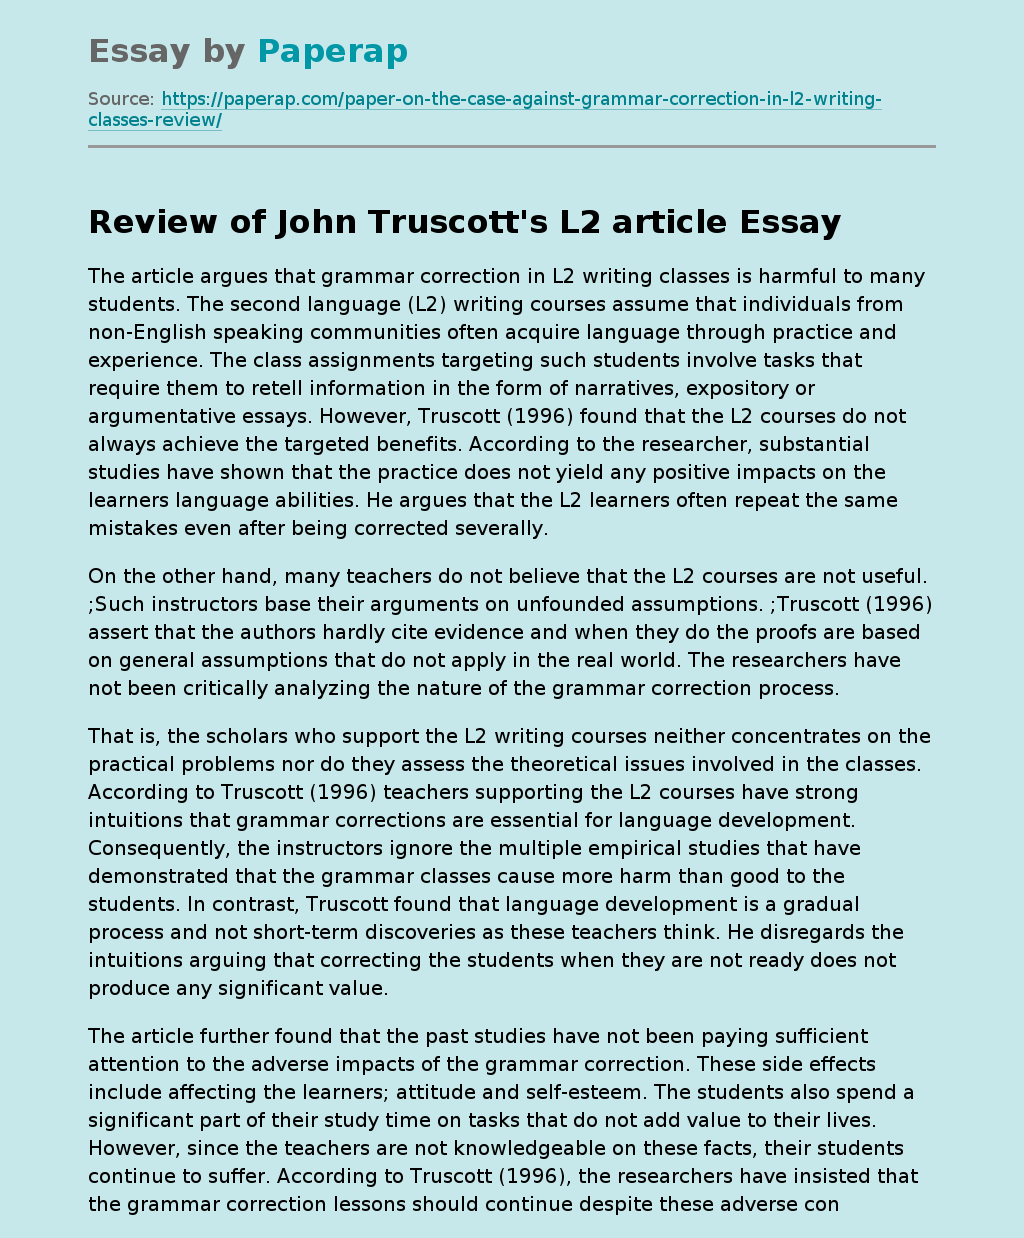 Review of John Truscott's L2 article